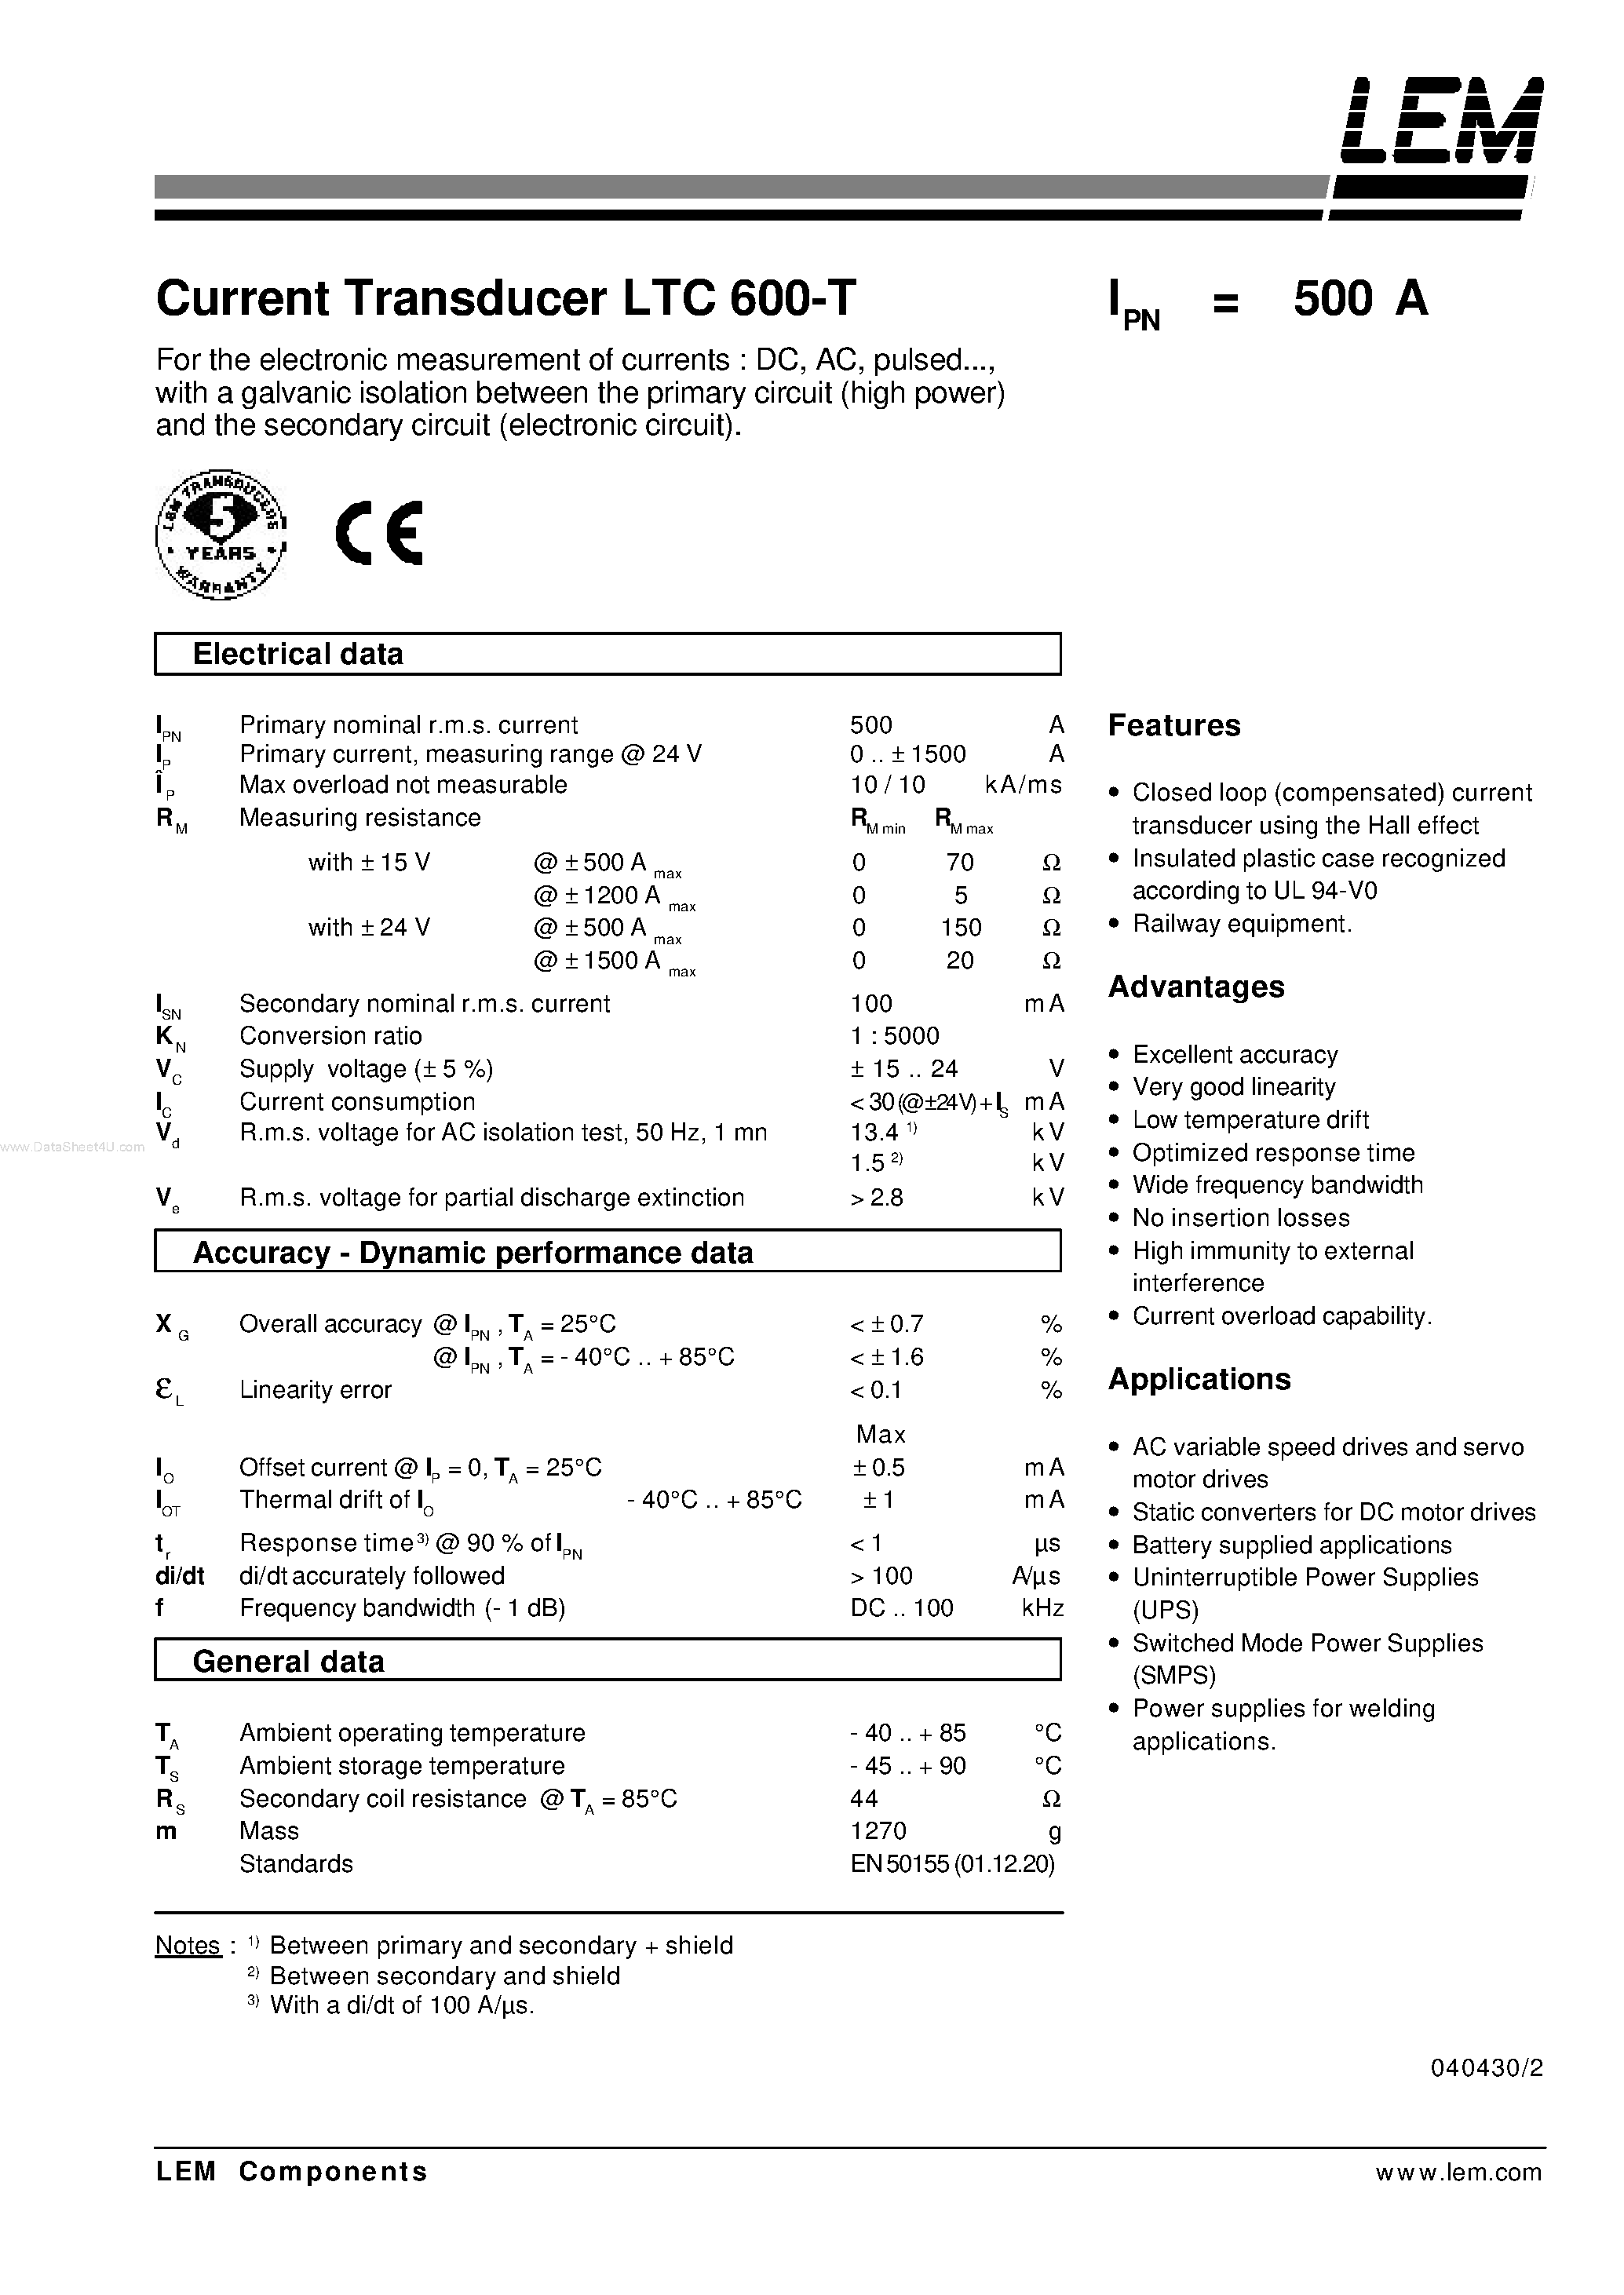 Datasheet LTC600-T - Current Transducer page 1